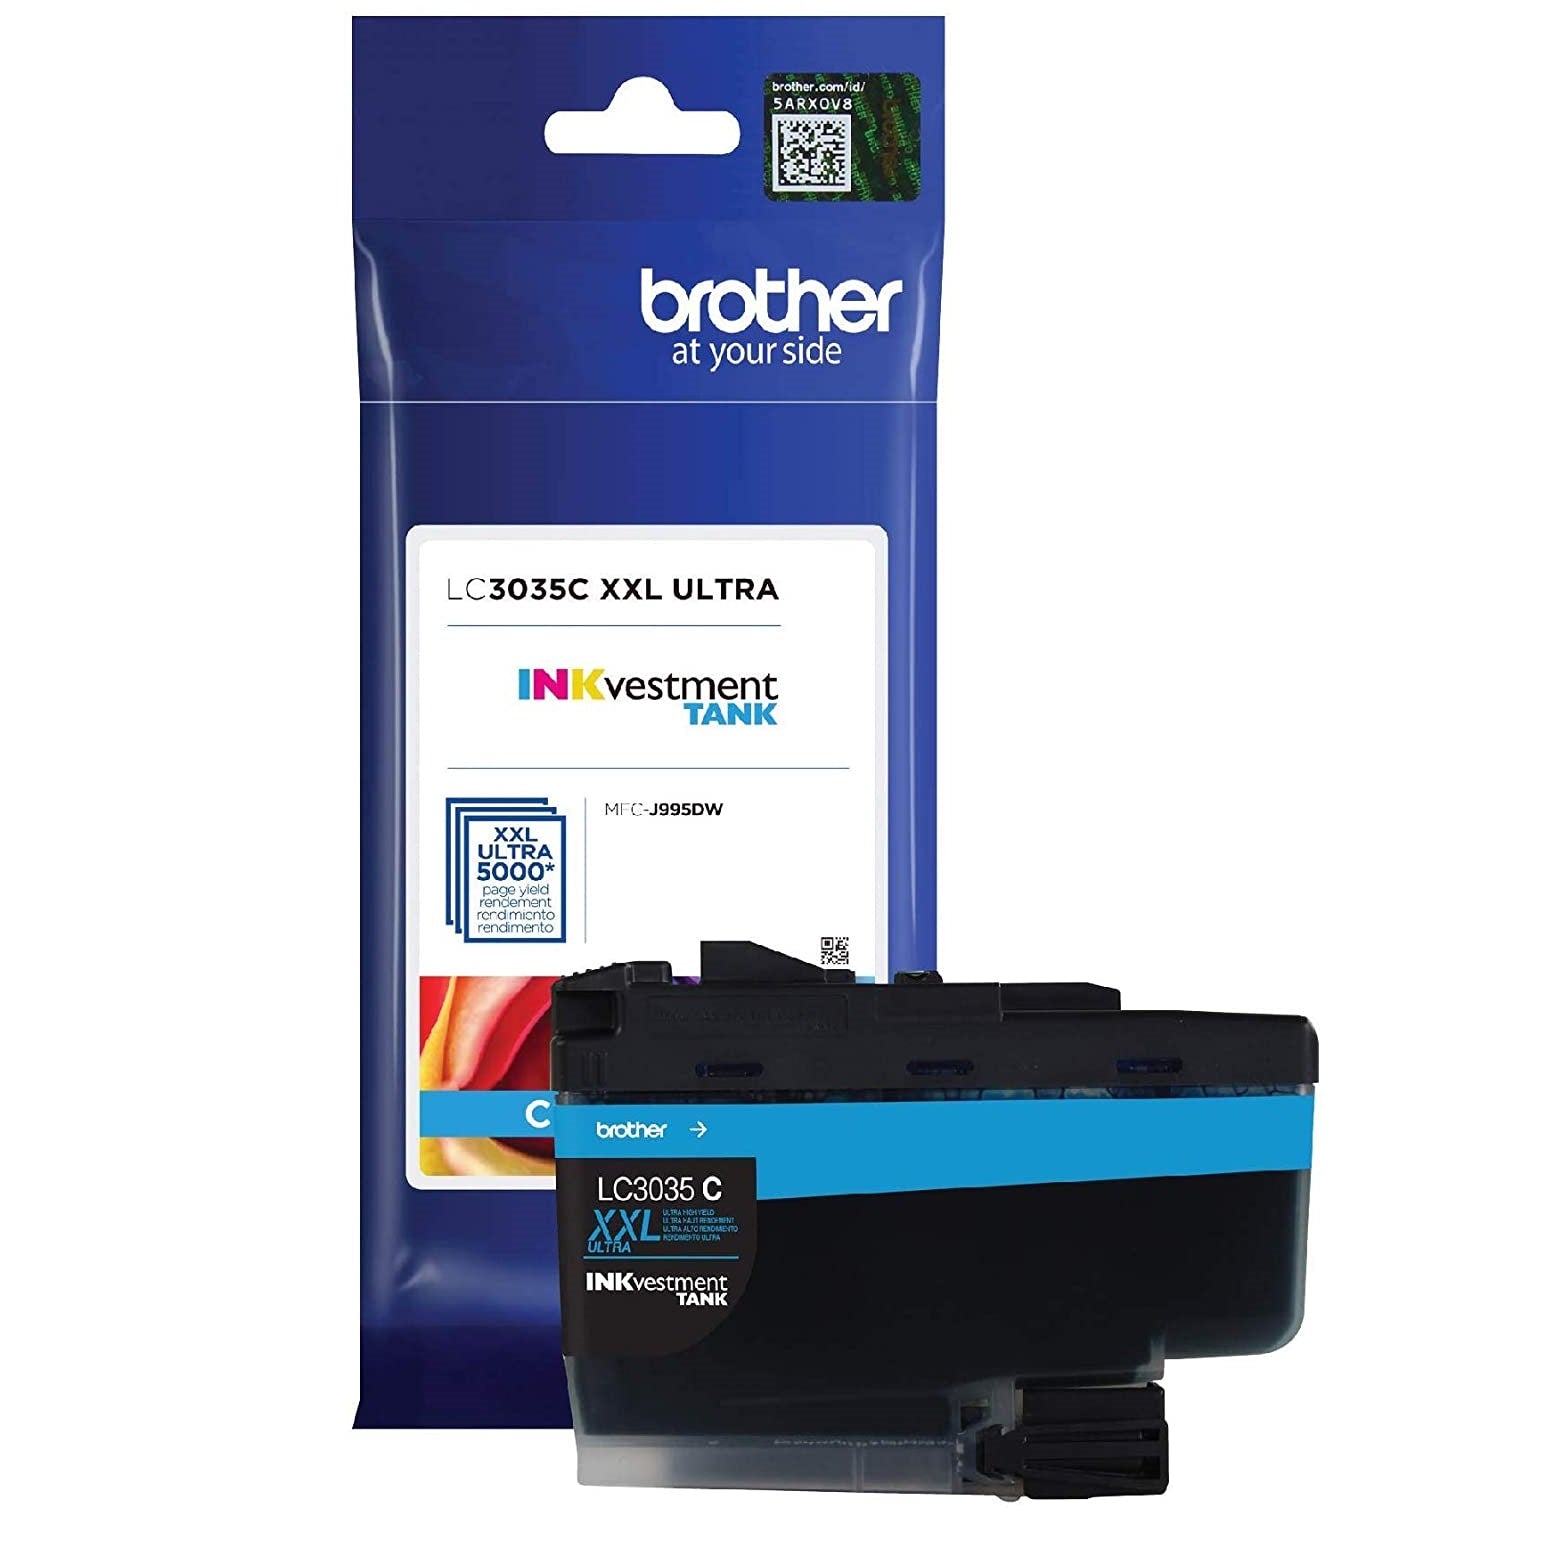 Absolute Toner Brother Genuine OEM LC3035CS Cyan Ultra High Yield Inkvestment Ink Cartridge | LC3035C Original Brother Cartridges